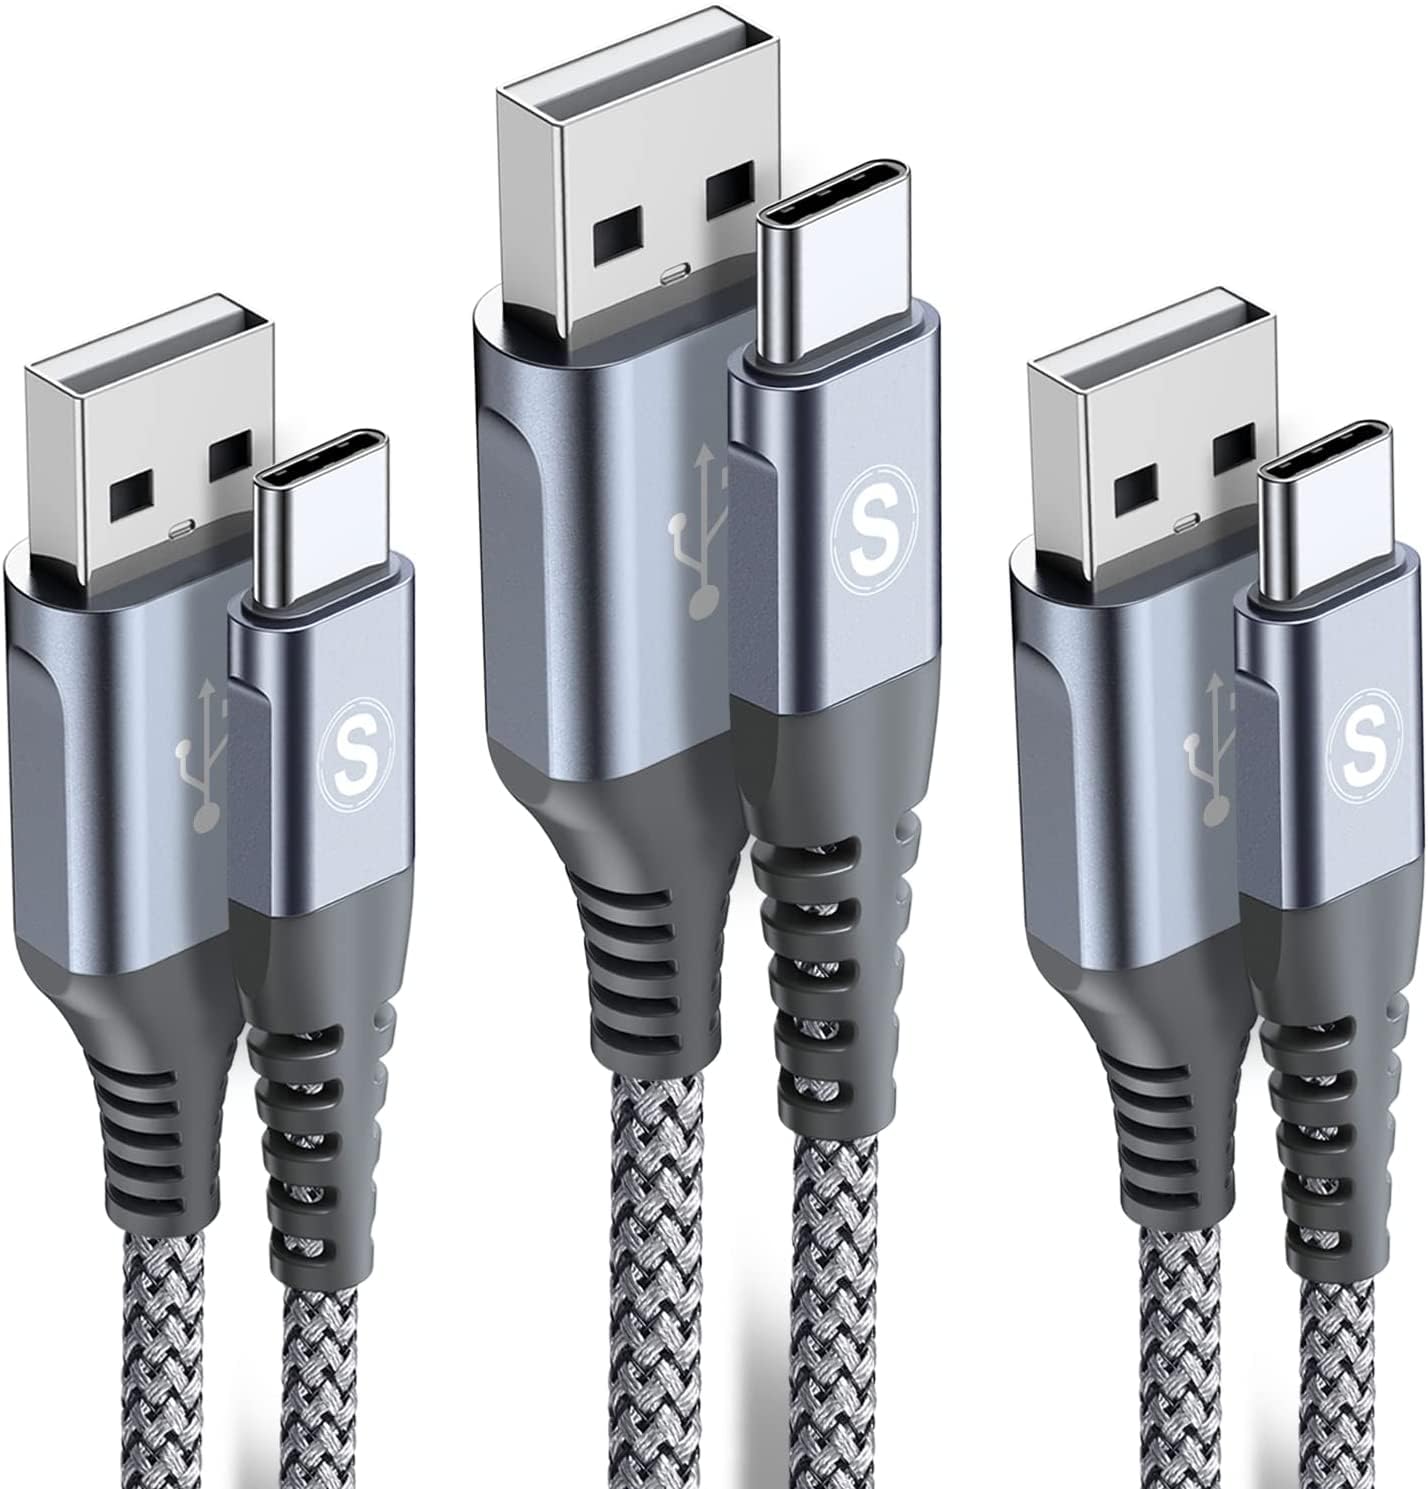 USB Type C ケーブル1m+1m+2m/3本セットSweguard USB-C USB-A 3.1A USB C ケーブル急速充電 タイプc 充電ケーブル iPhone 15,iPad Pro,S